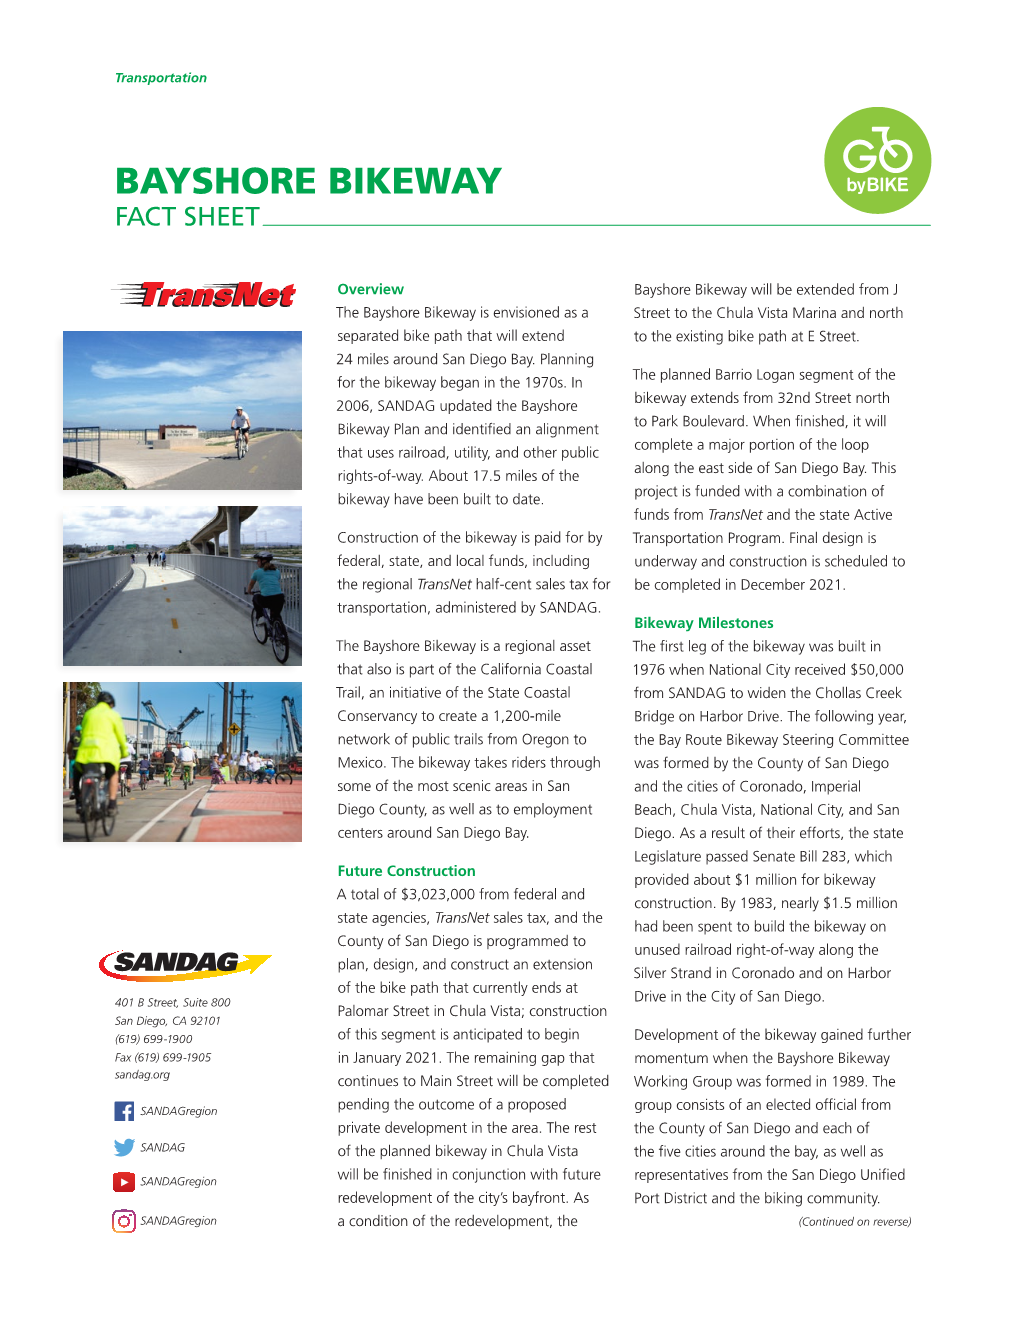 Bayshore Bikeway Fact Sheet